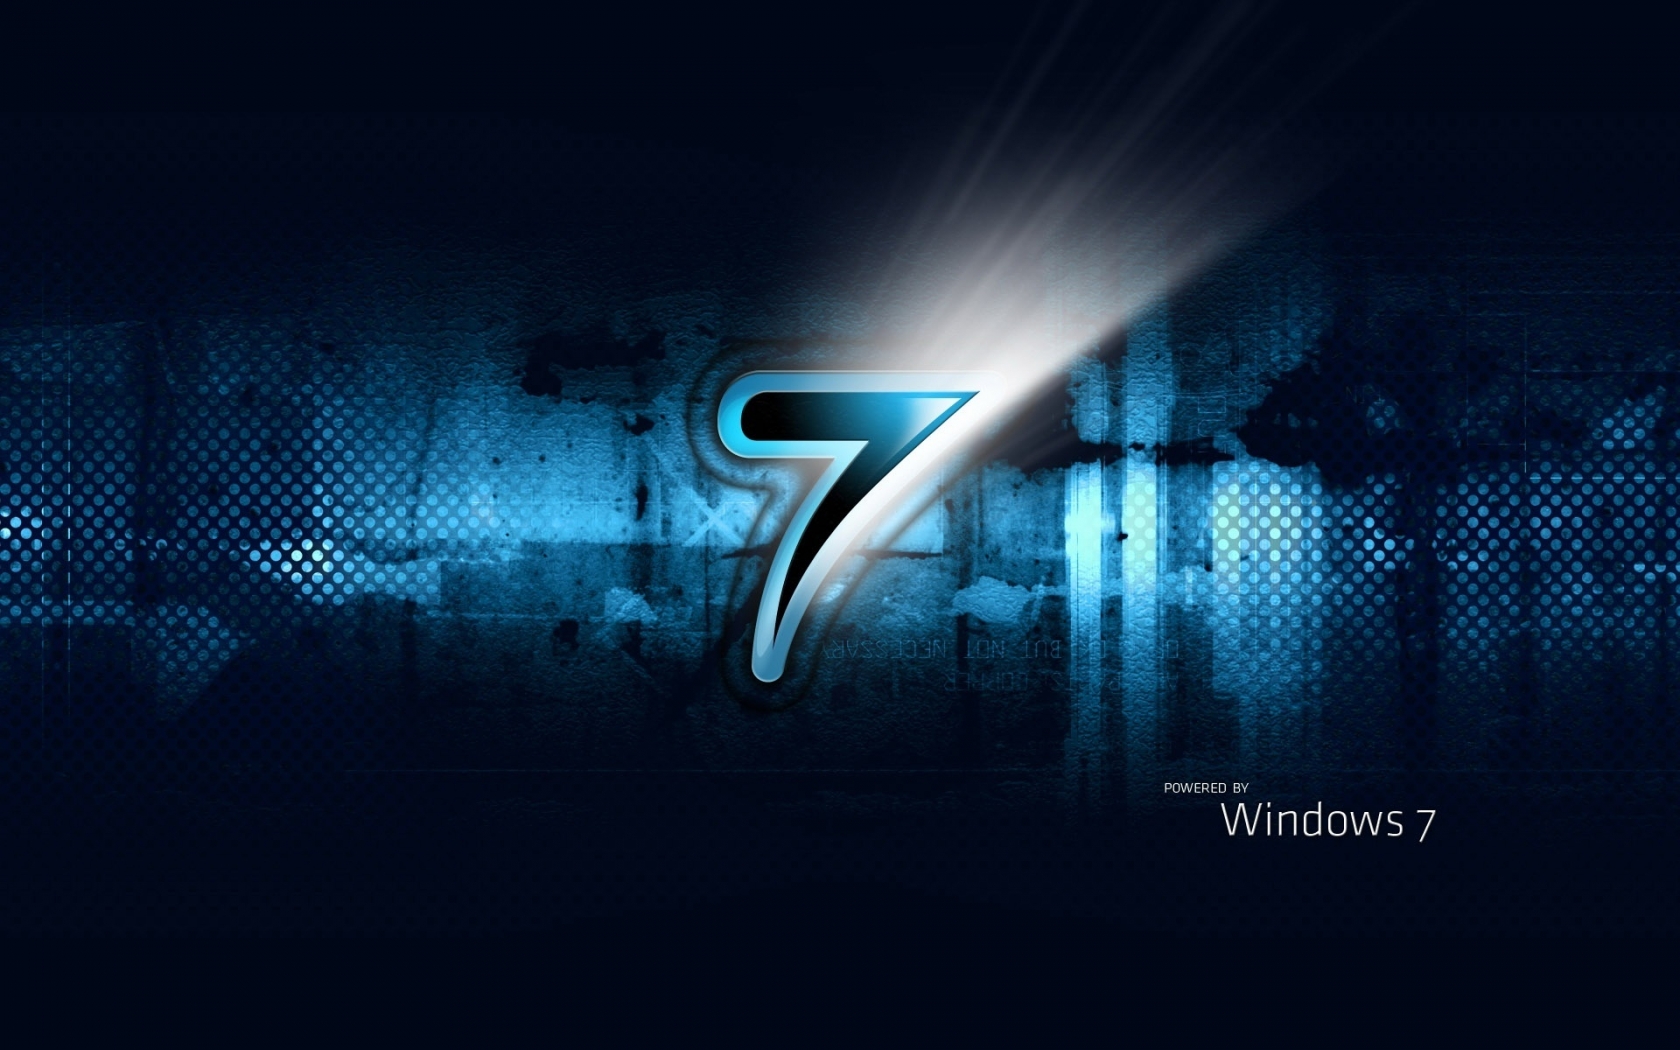 Superb Windows 7 for 1680 x 1050 widescreen resolution